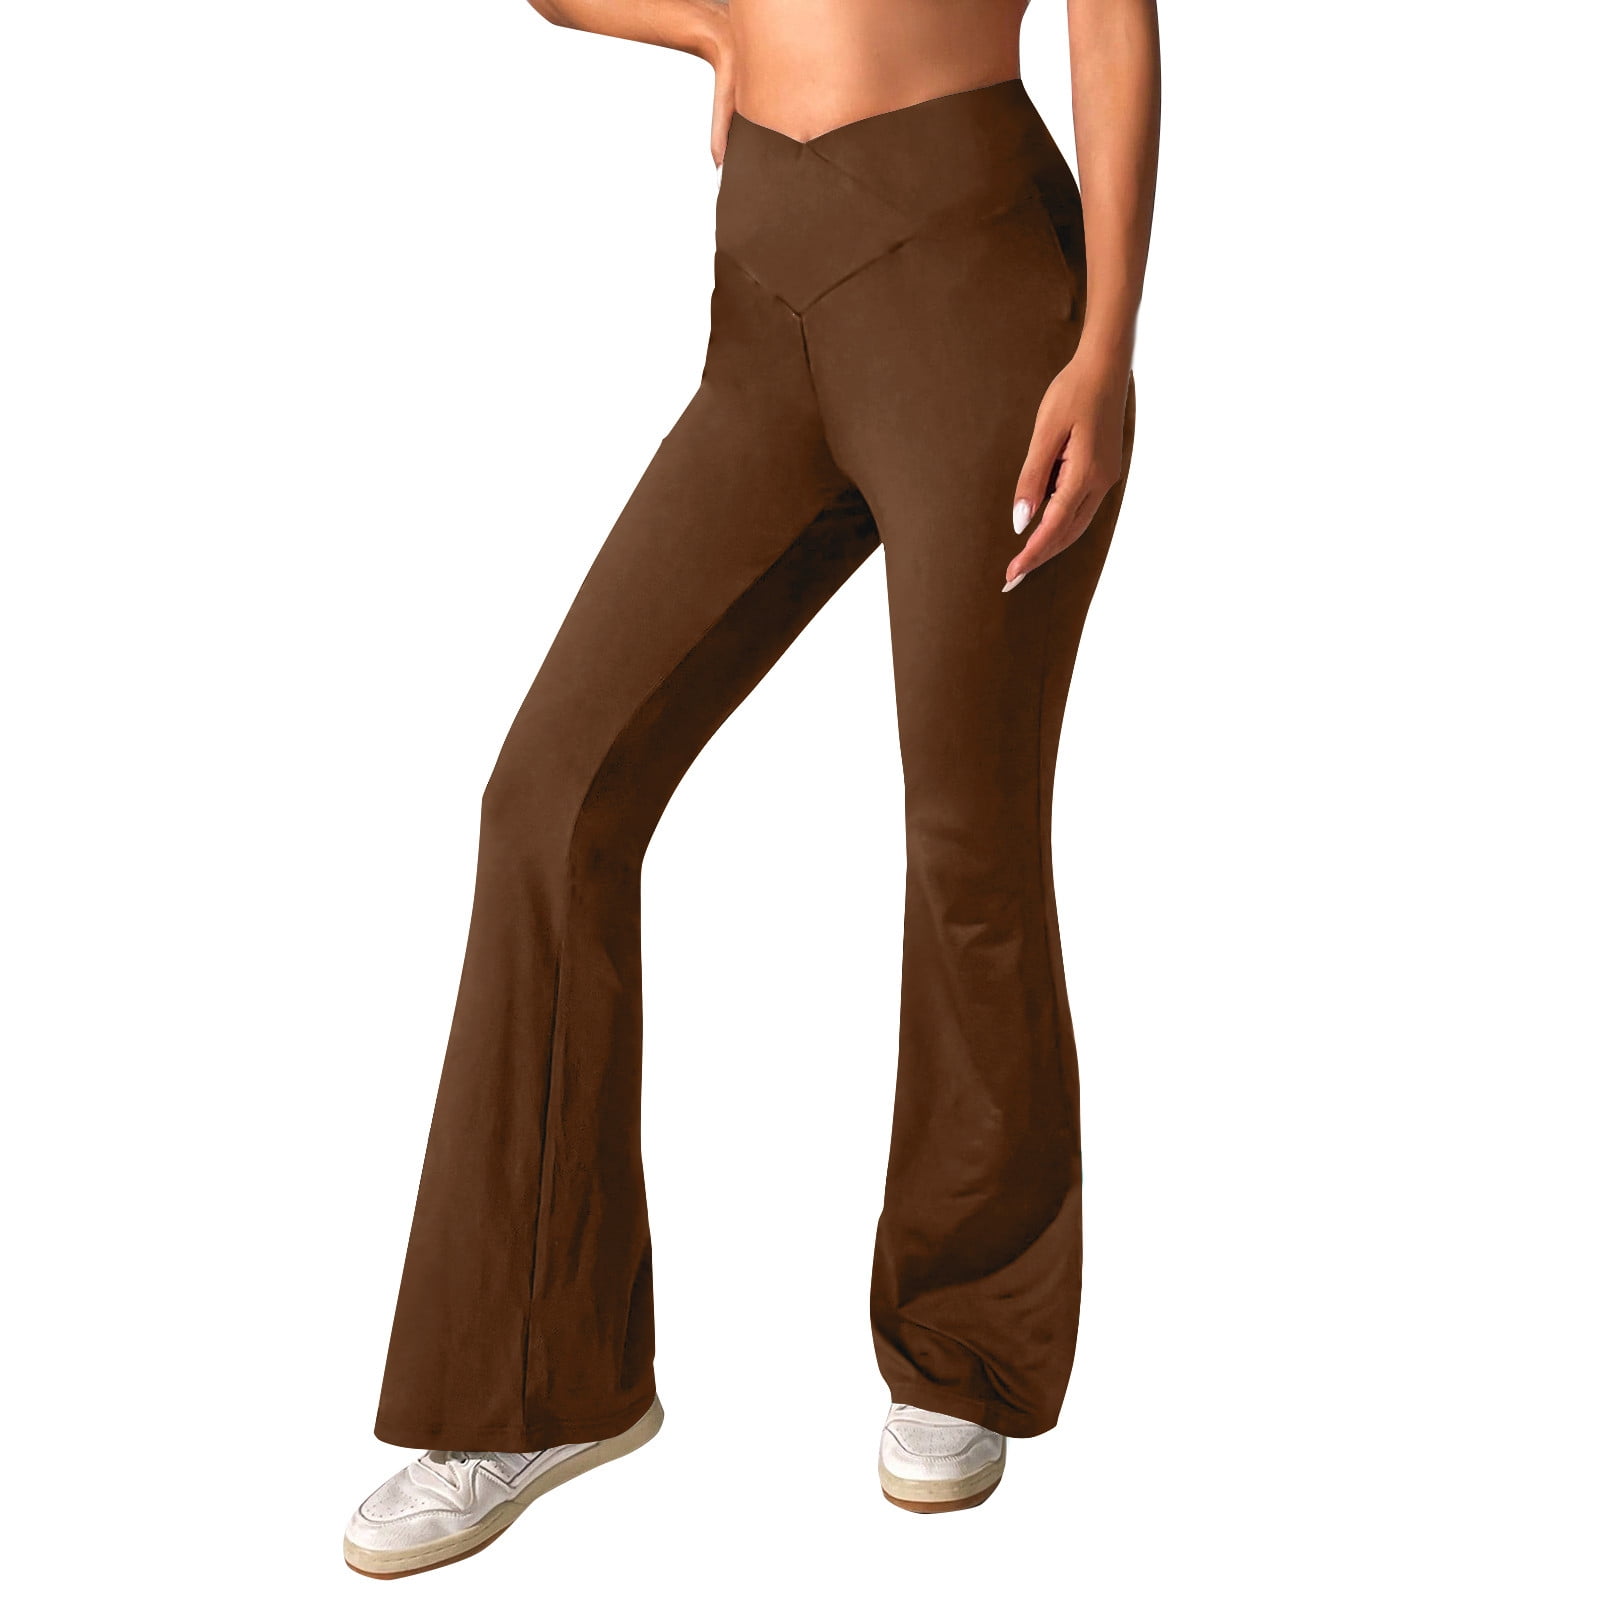 Mlqidk Womens Bootcut Yoga Pants Leggings High Waisted Tummy Control Yoga  Flare Pants Brown S 